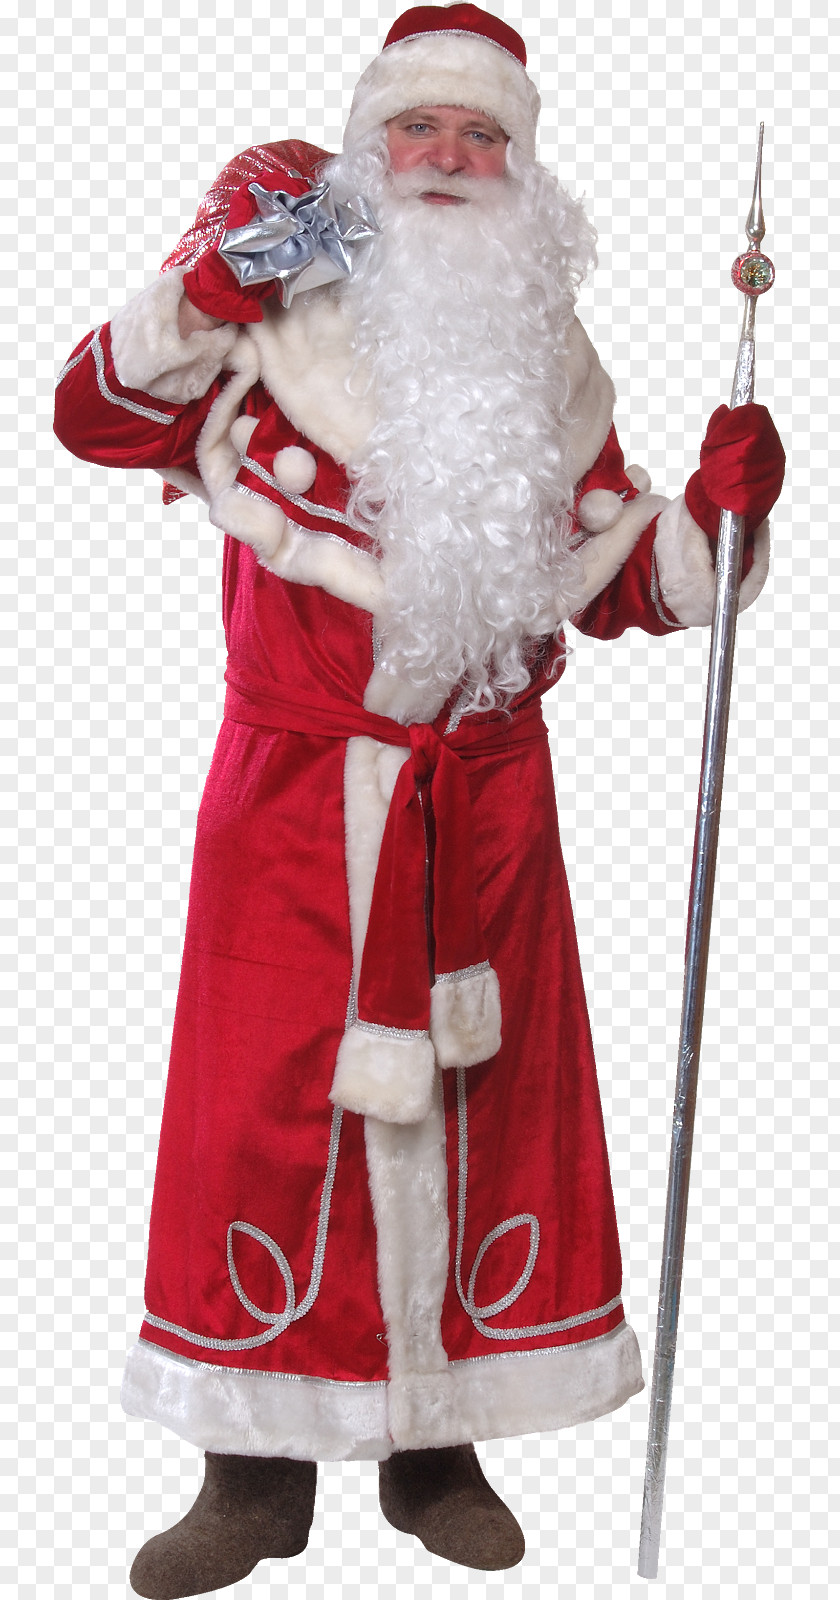 Santa Claus Ded Moroz Snegurochka Grandfather Christmas Ornament PNG